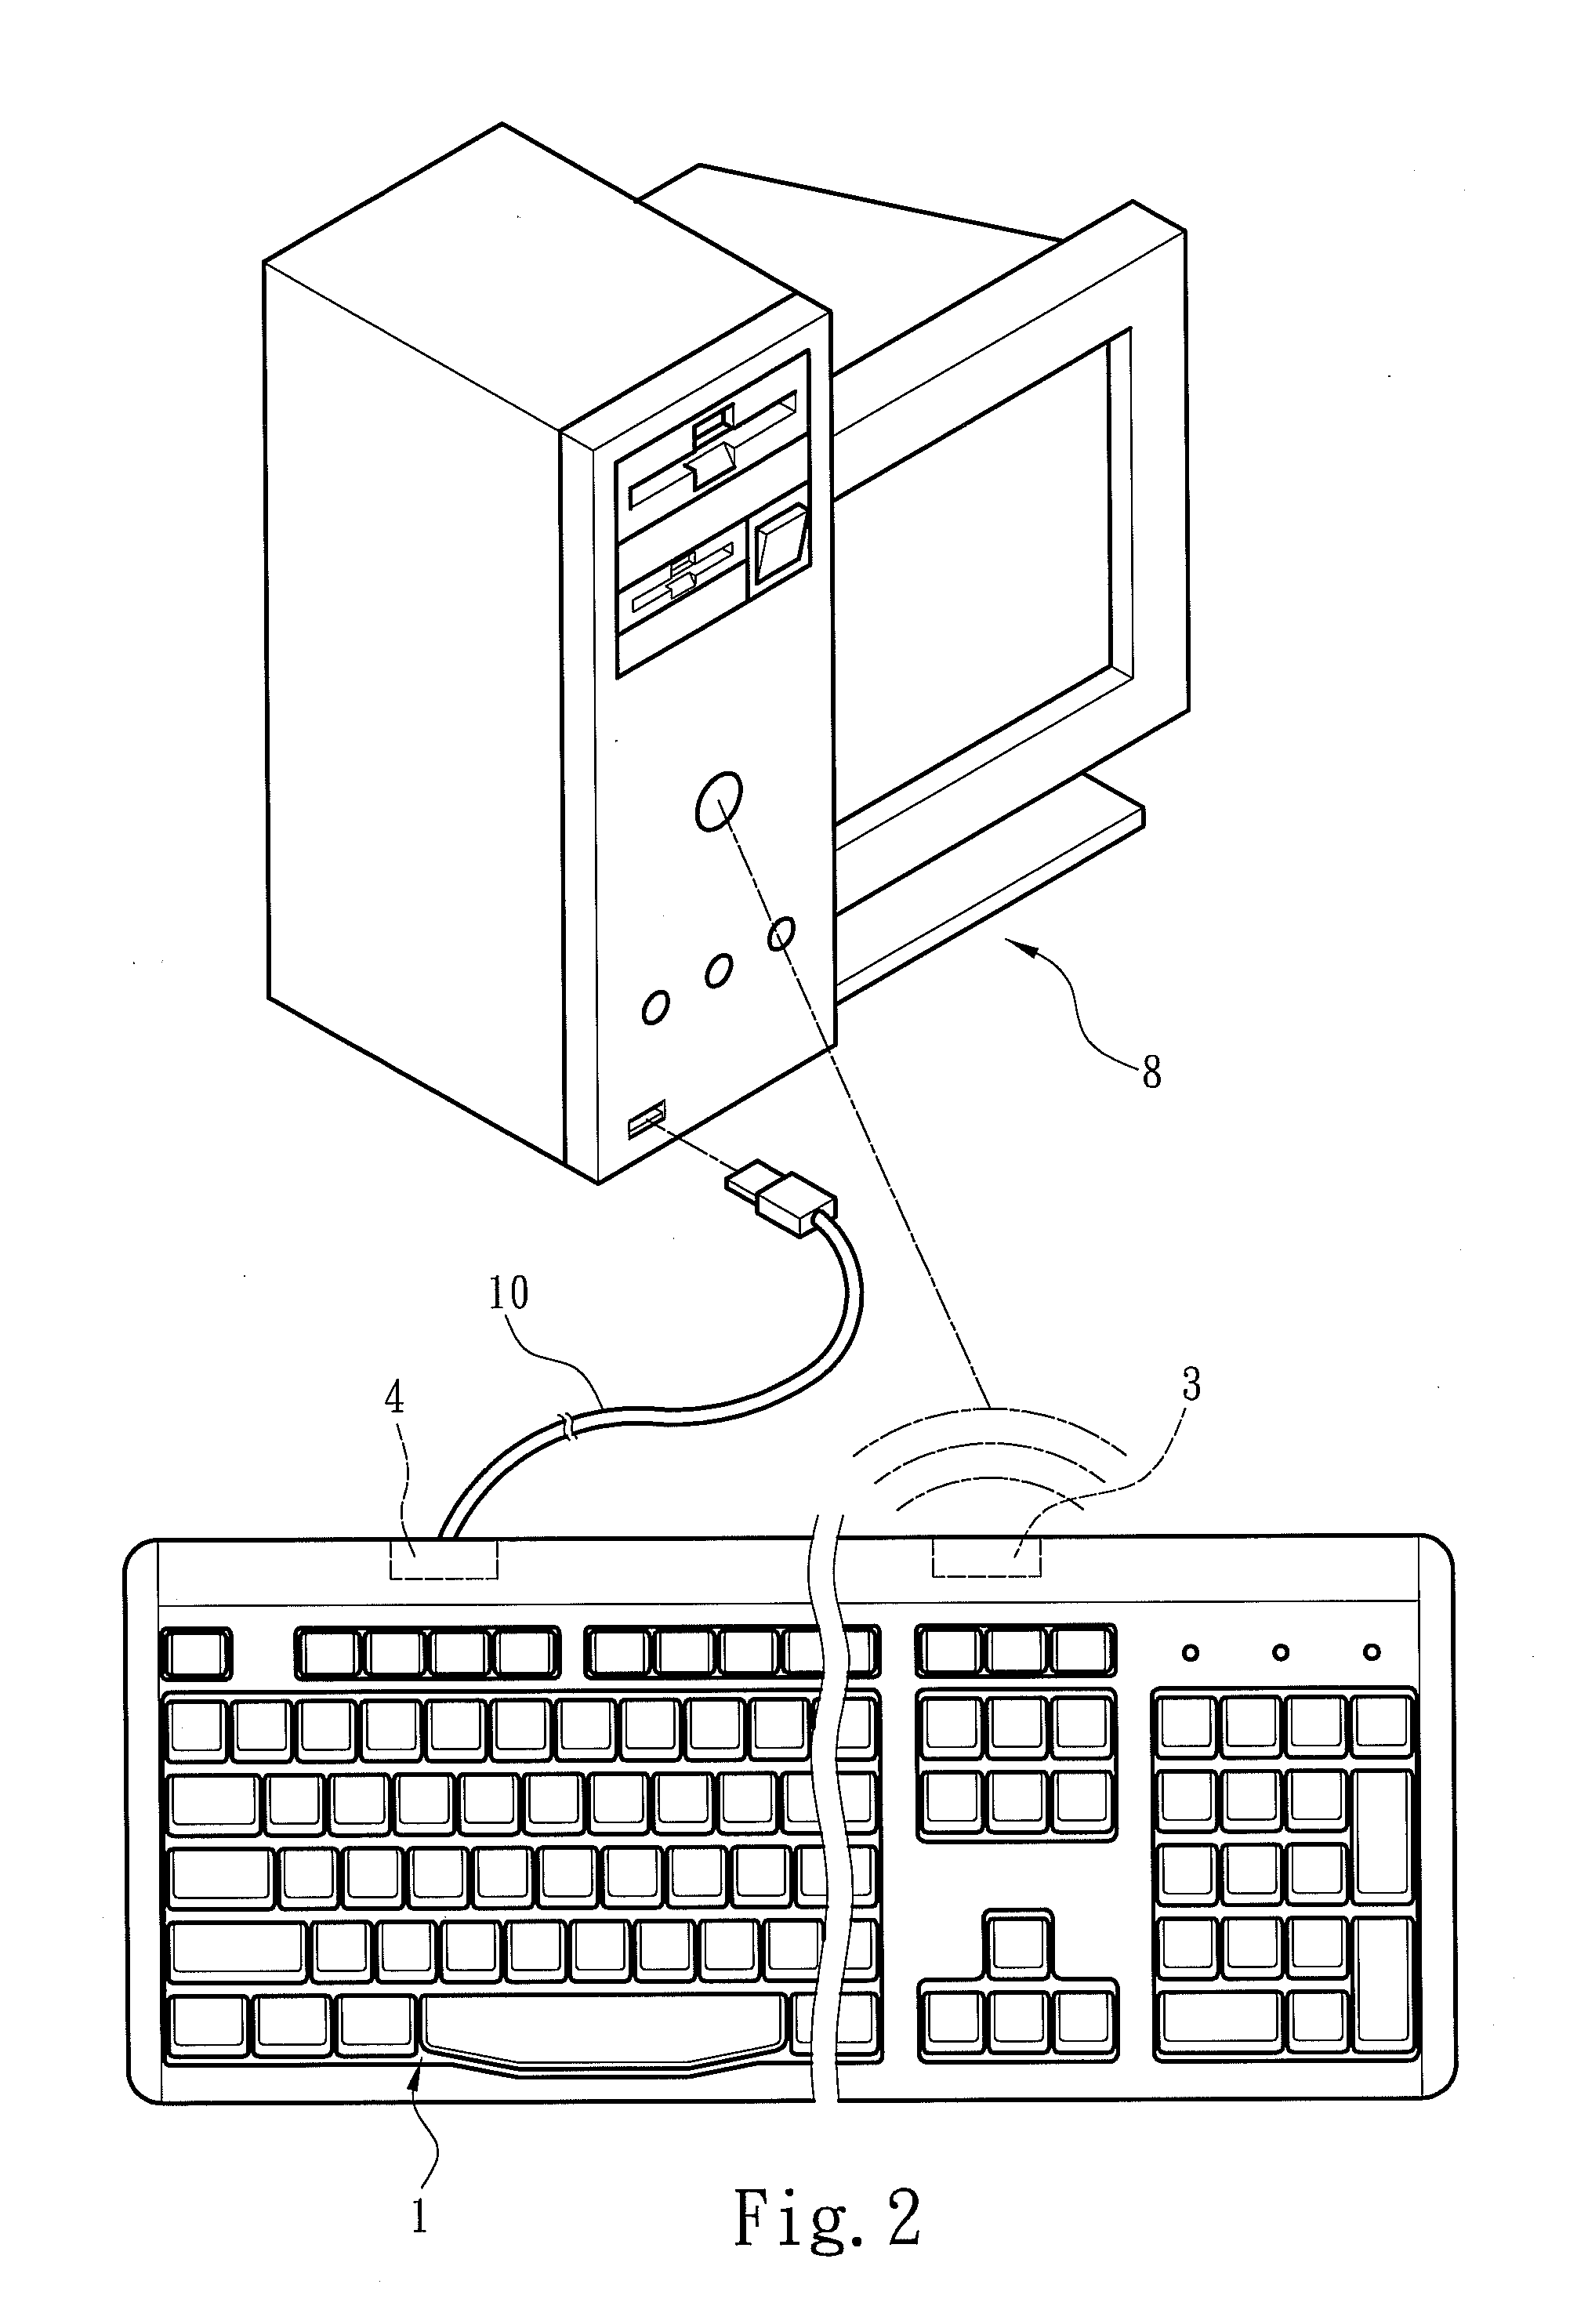 Keyboard providing self-detection of linkage